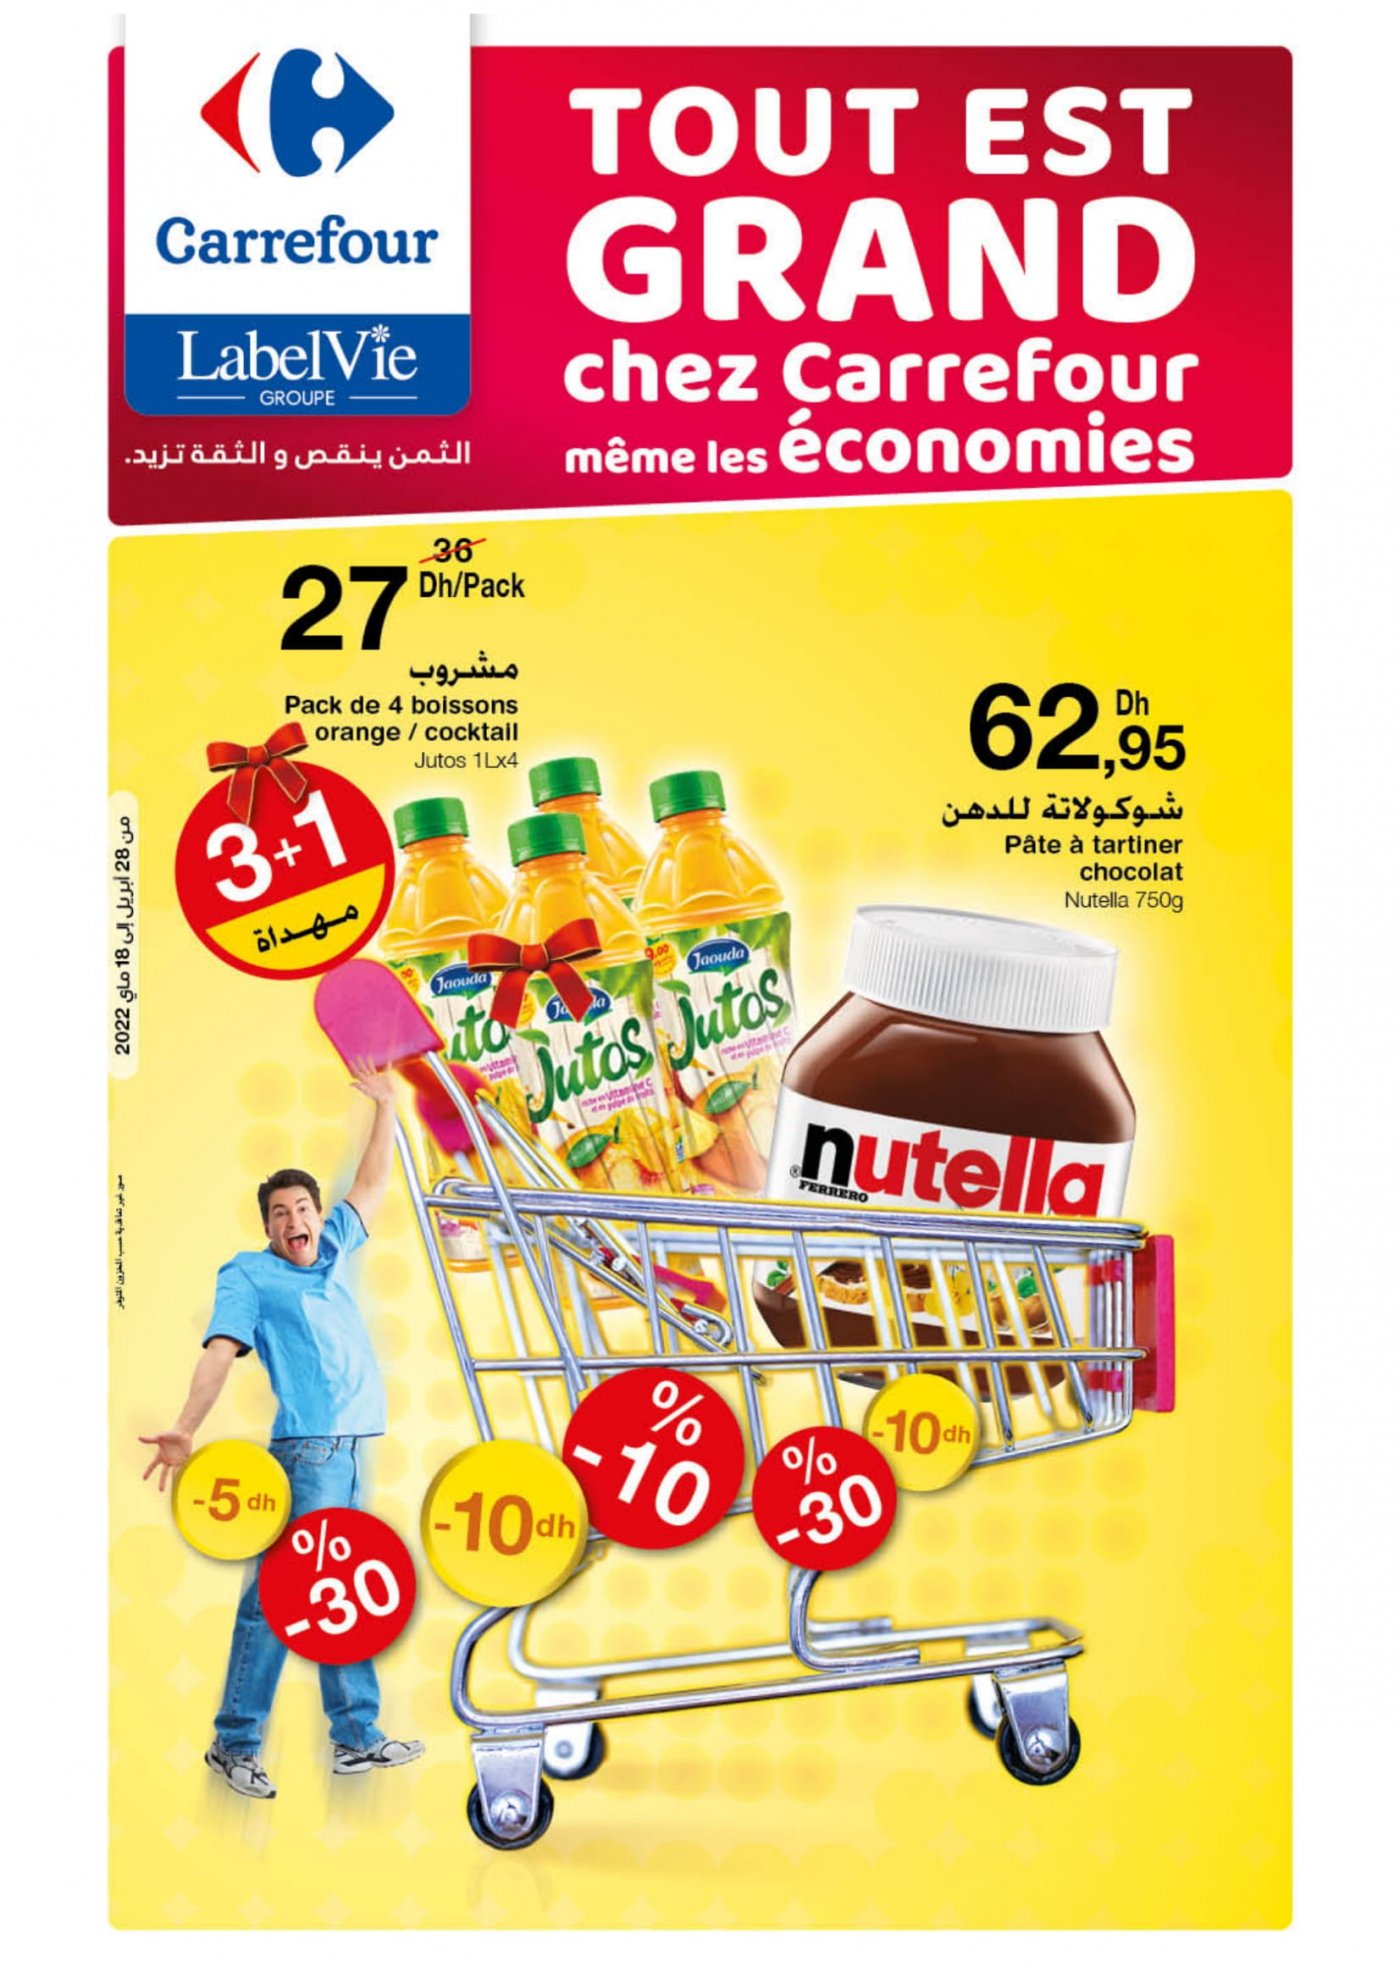 Catalogue Carrefour Mai 2022 spécial Grandes économies mars 2023